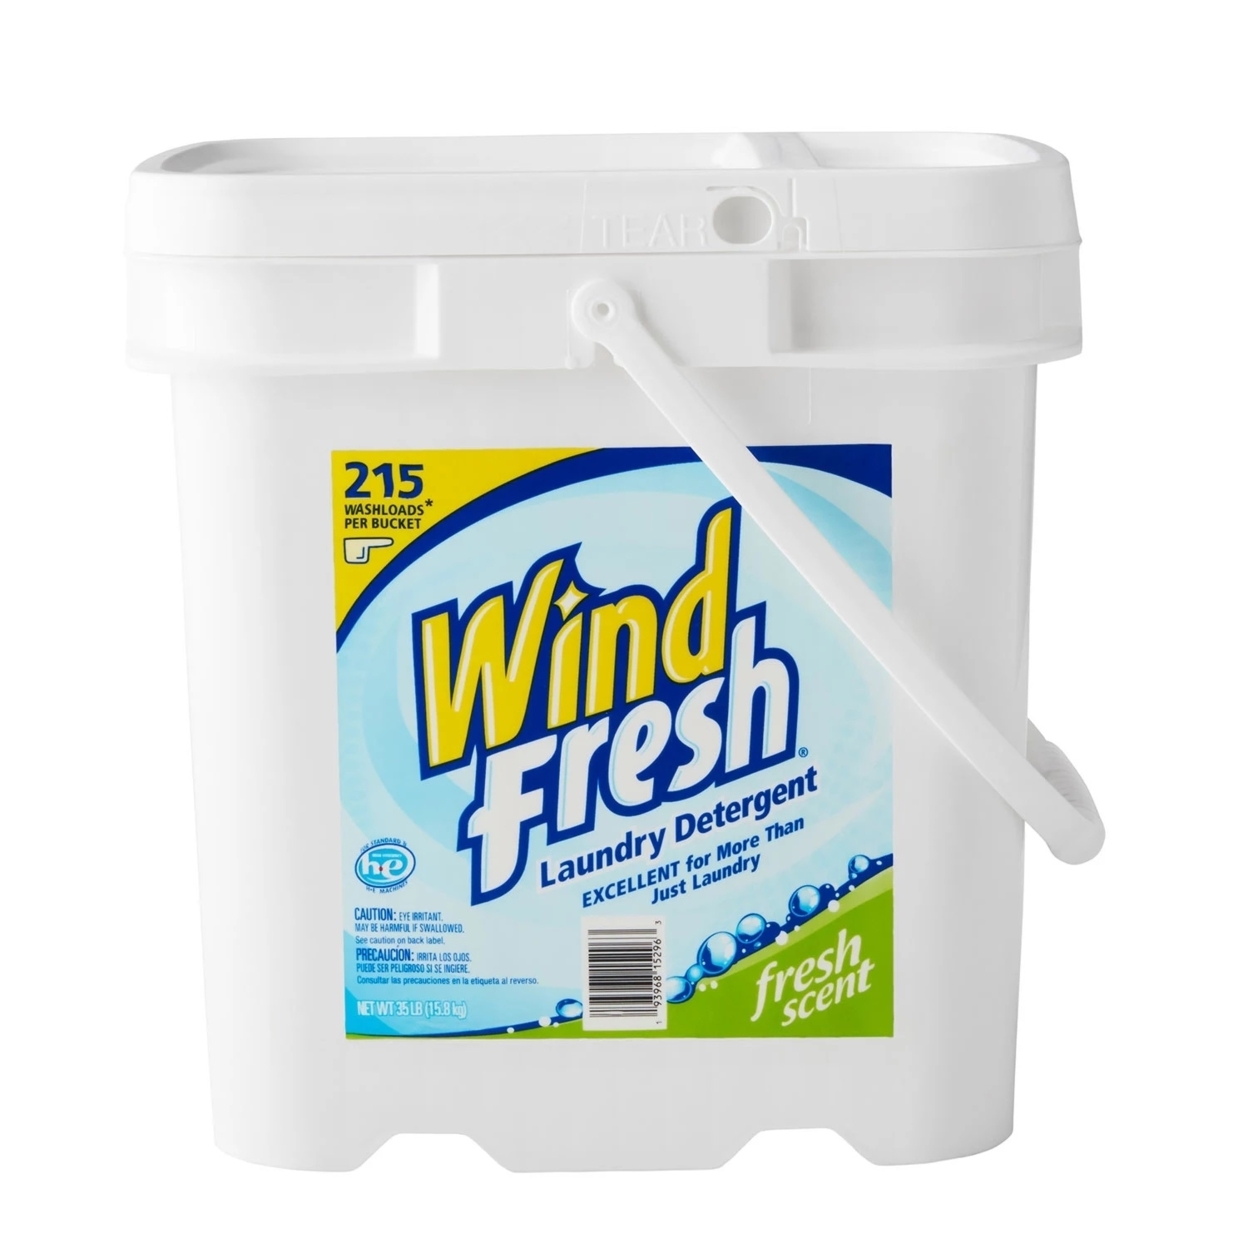 WindFresh Powder Laundry Detergent, Fresh Scent (35 Pounds, 215 Loads)